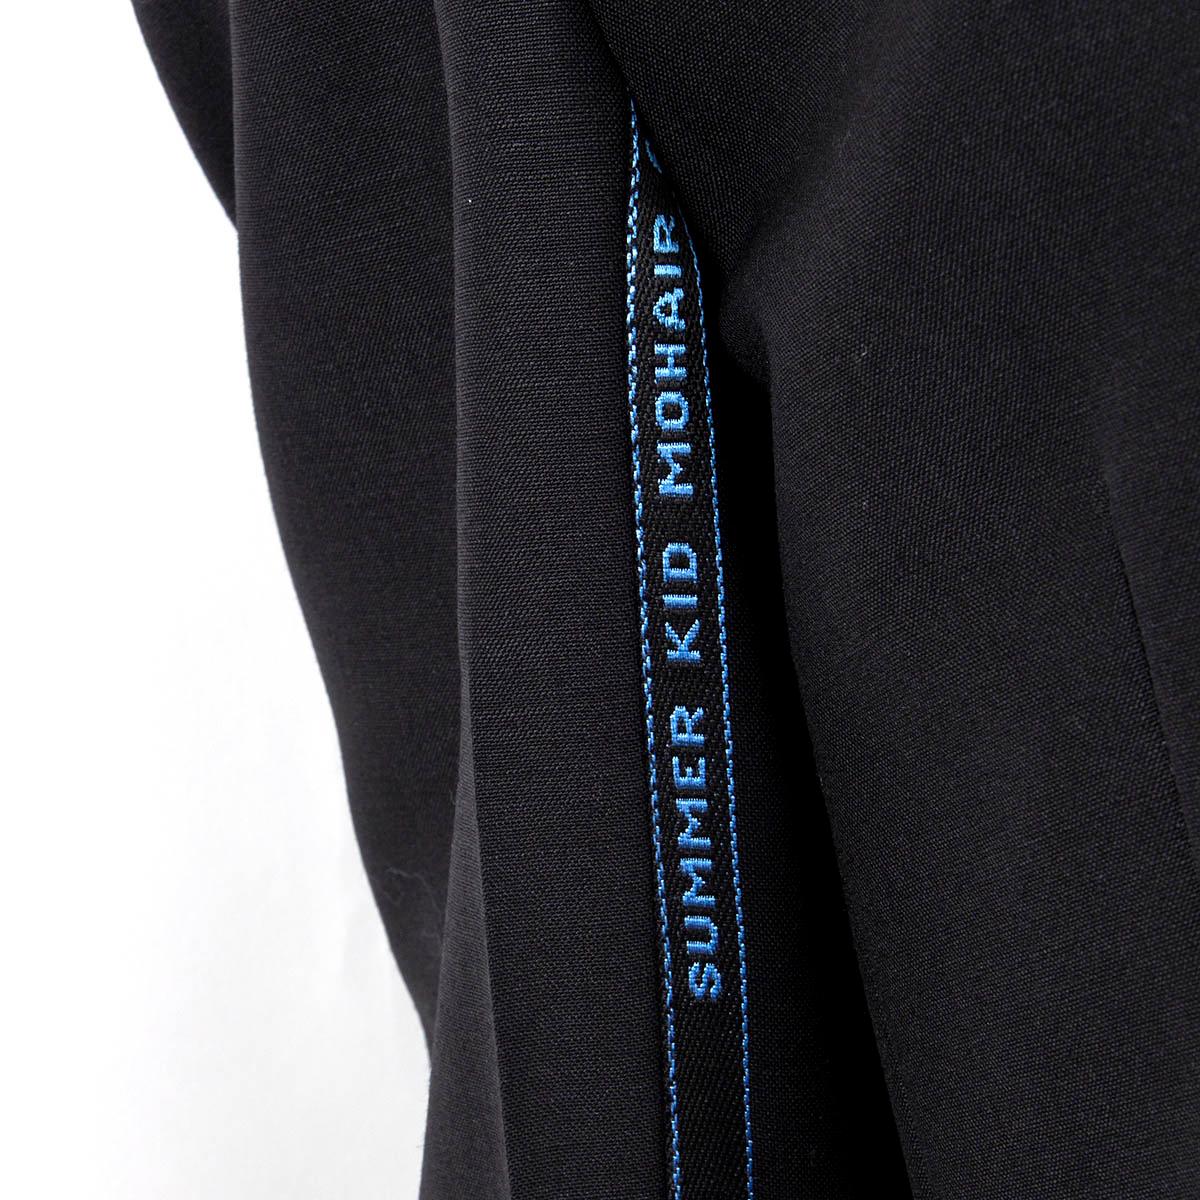 PRADA charcoal grey 2019 SUMMER KID MOHAIR OVERSIZED Blazer Jacket 42 M In Excellent Condition For Sale In Zürich, CH